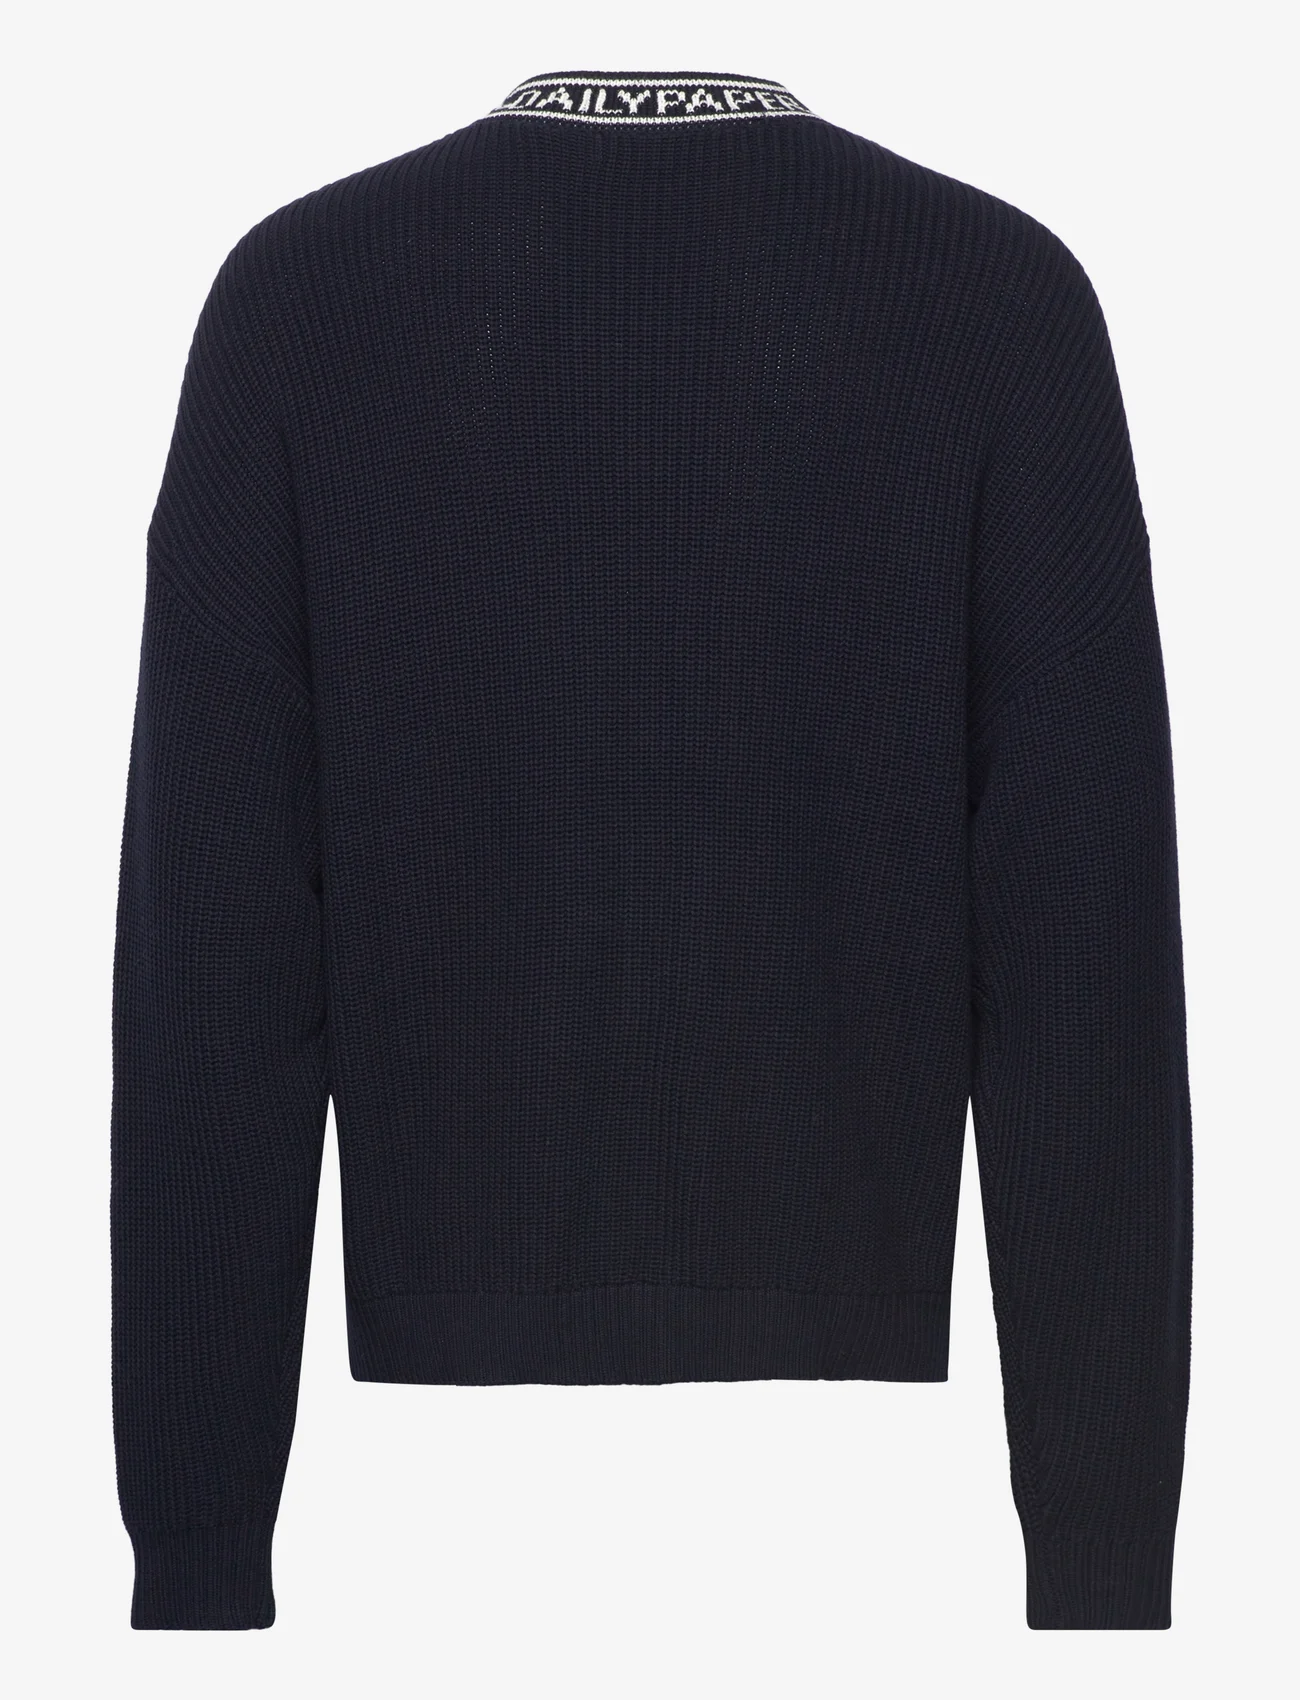 Daily Paper - roshaun sweater - knitted v-necks - deep navy - 1